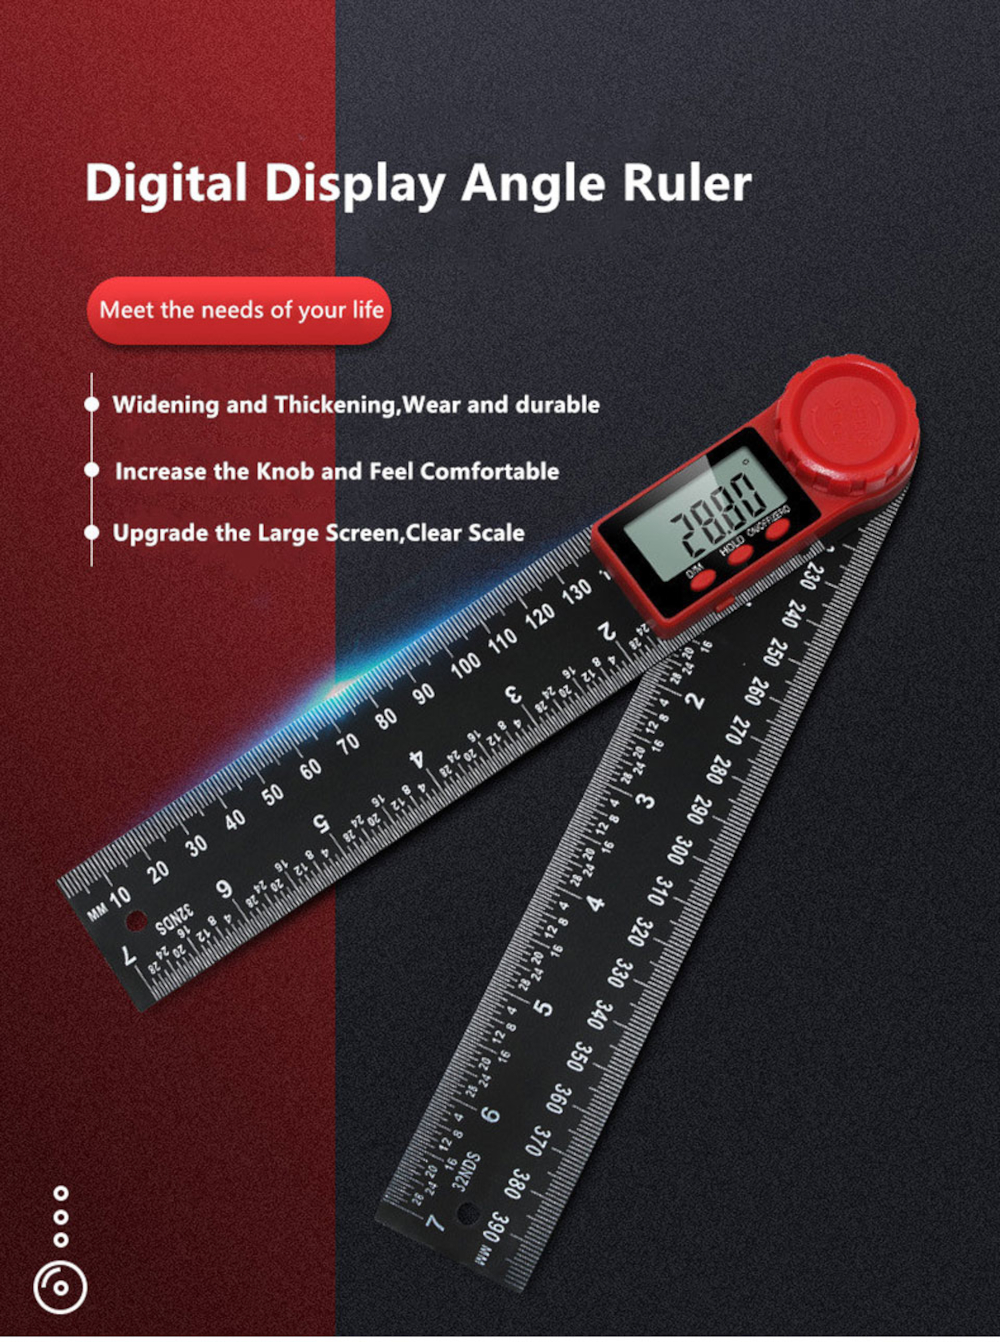 200300mm-360-Degree-LCD-Digital-Display-Angle-Ruler-Inclinometer-Goniometer-Protractor-Measuring-Too-1791660-1